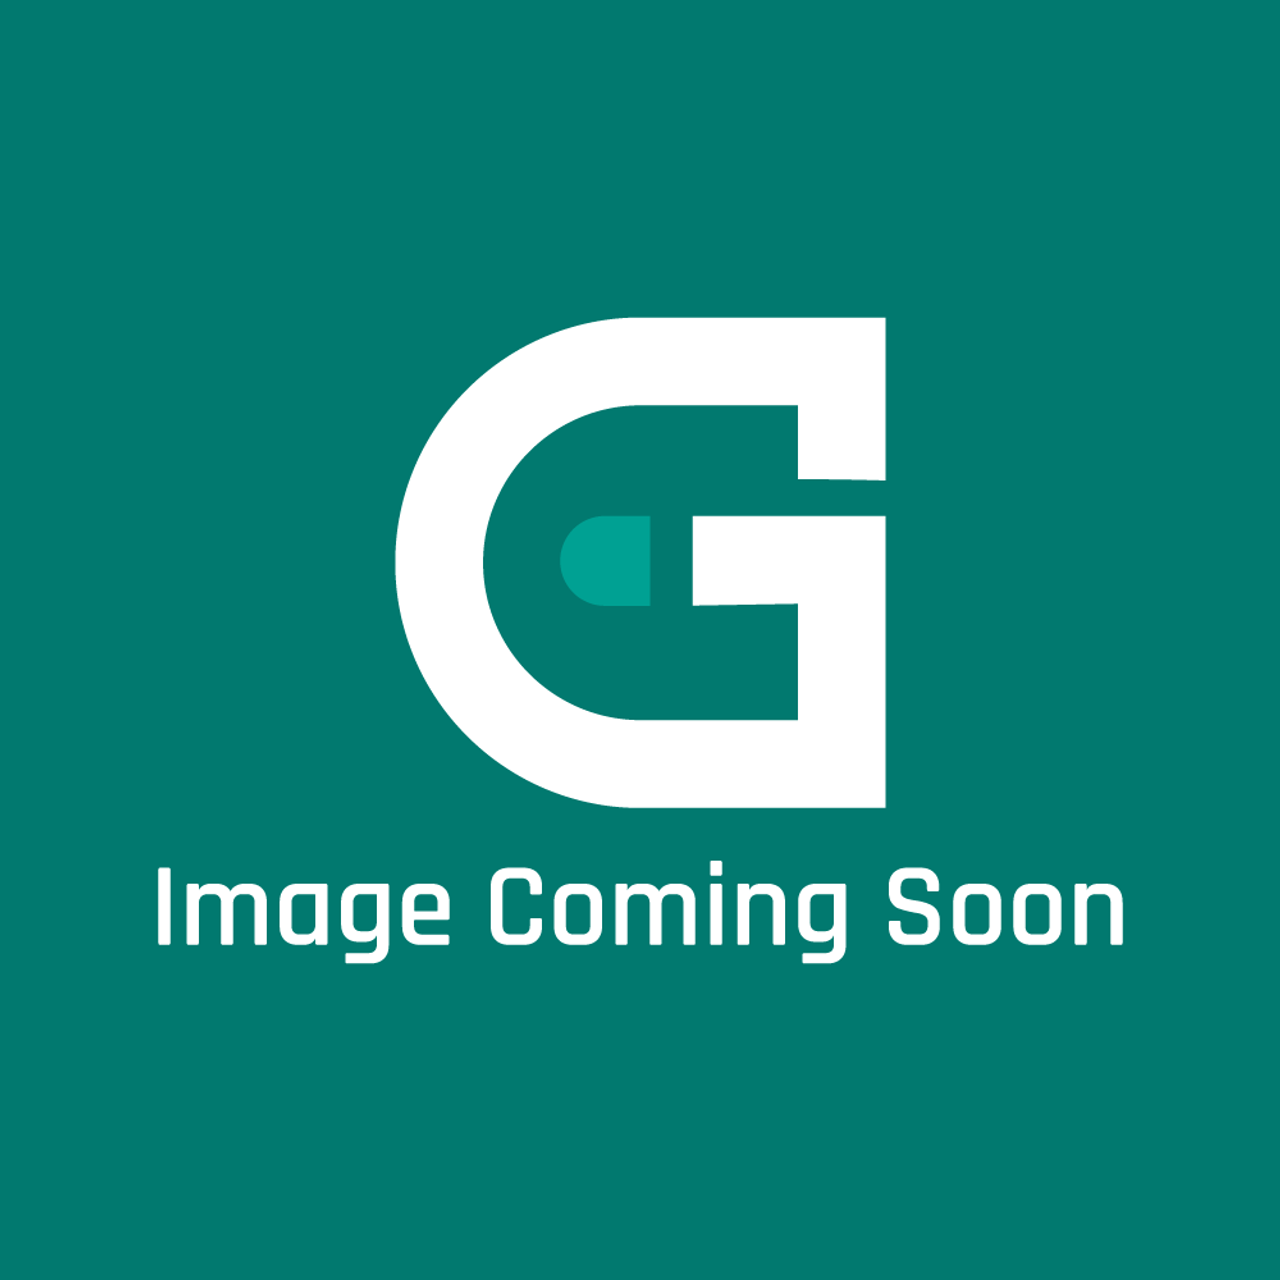 GE Appliances WB28K10800 - Kit Conversion Lp - Image Coming Soon!